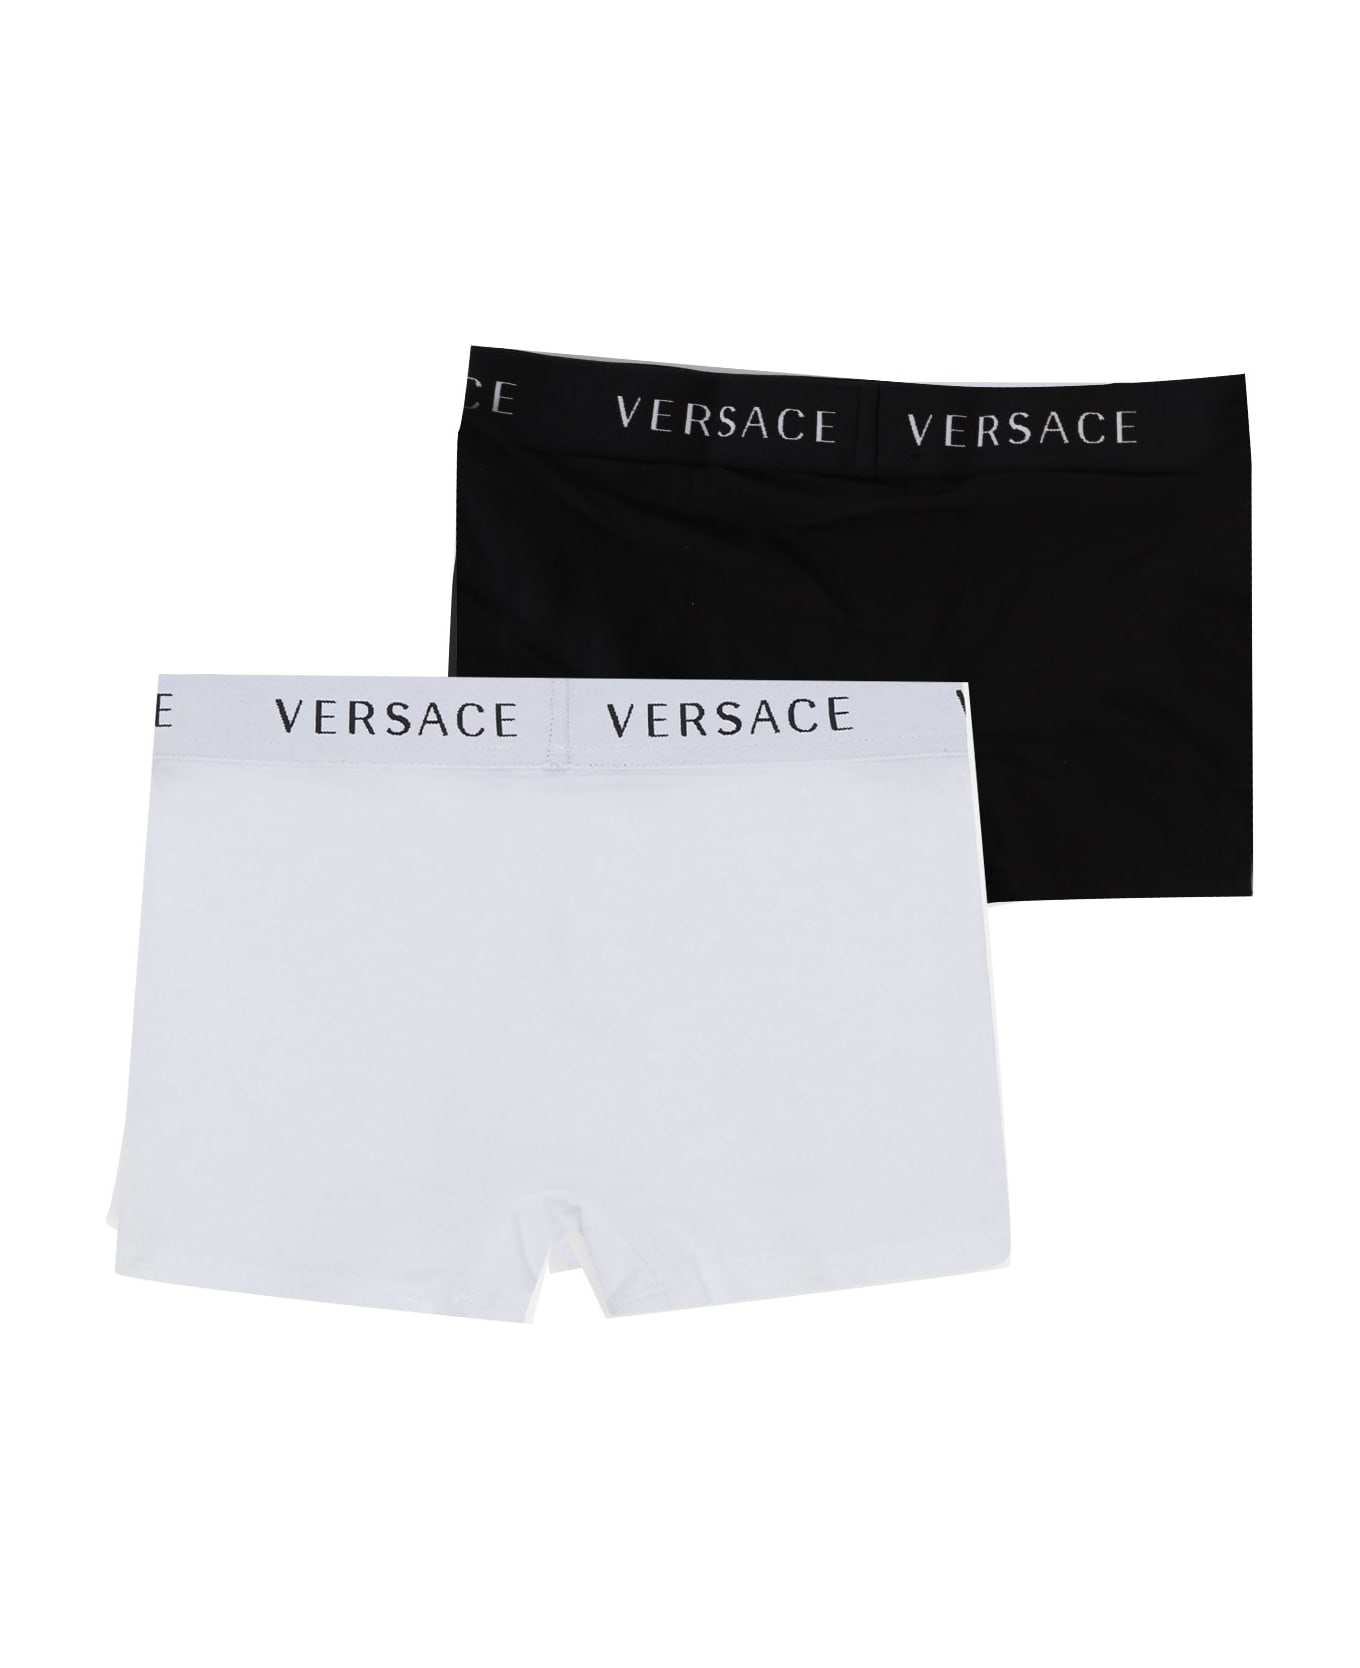 Versace Pack Of 2 Cotton Boxer Briefs - Multicolor